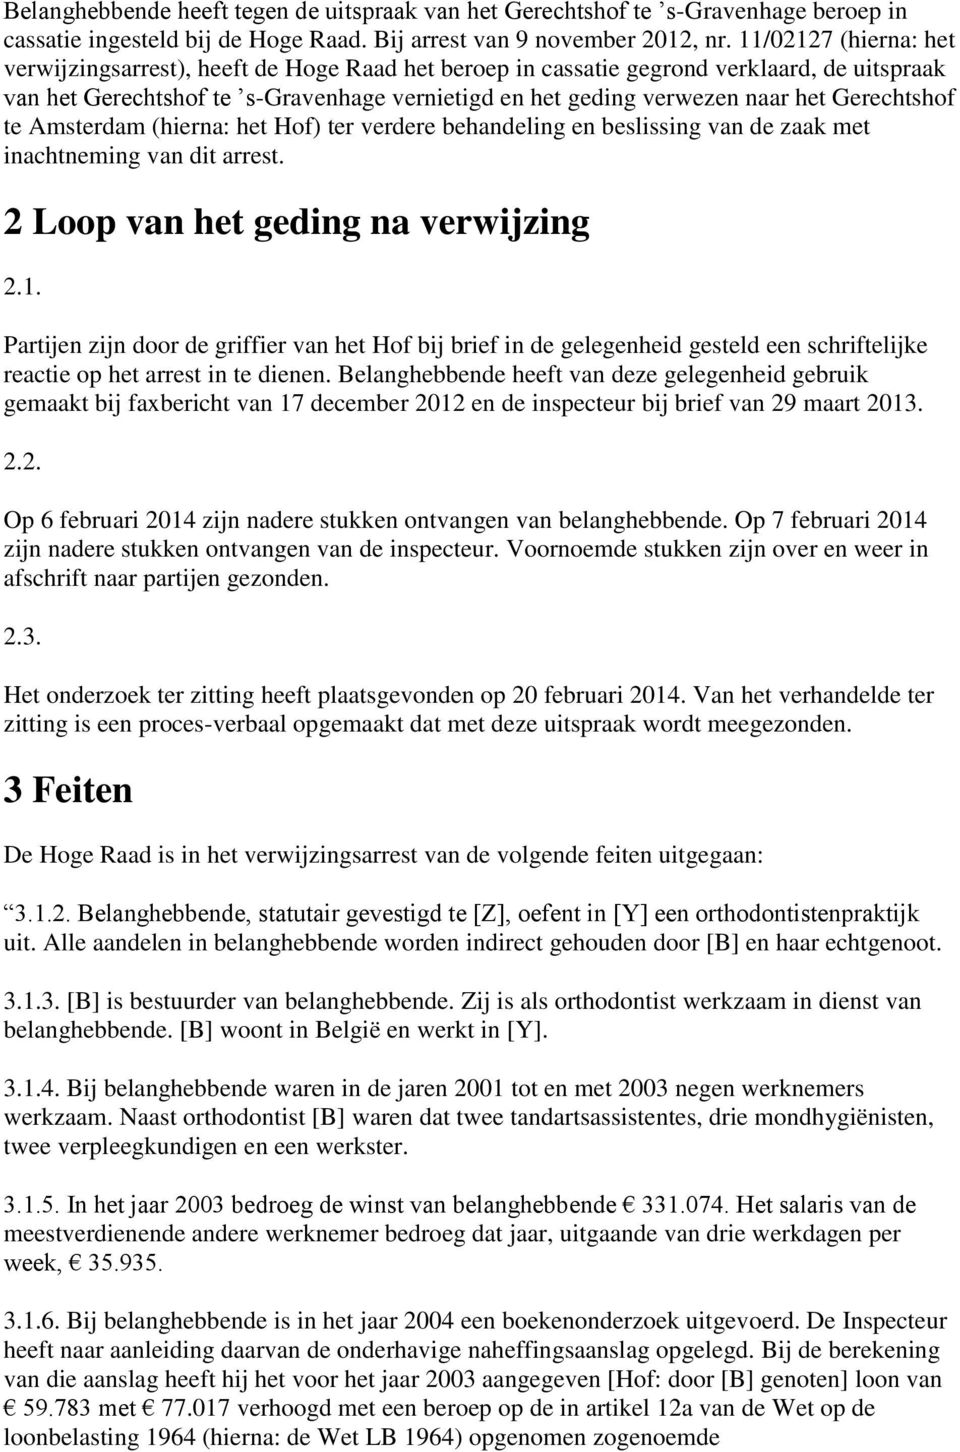 Gerechtshof te Amsterdam (hierna: het Hof) ter verdere behandeling en beslissing van de zaak met inachtneming van dit arrest. 2 Loop van het geding na verwijzing 2.1.